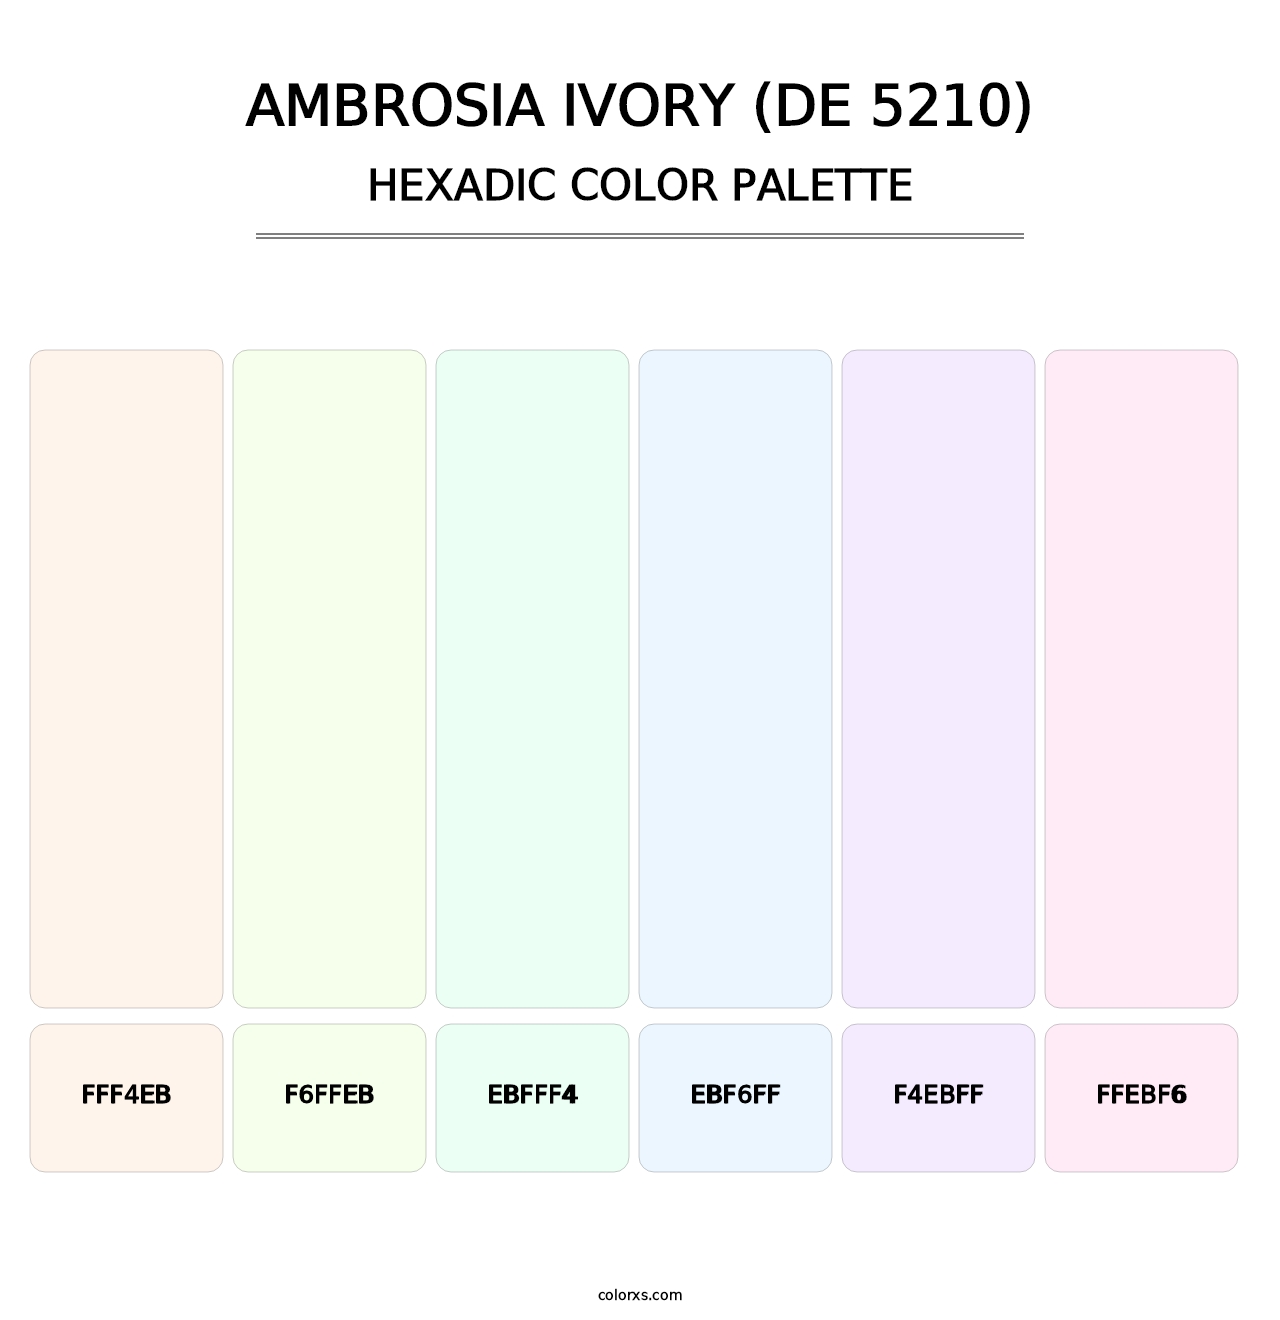 Ambrosia Ivory (DE 5210) - Hexadic Color Palette